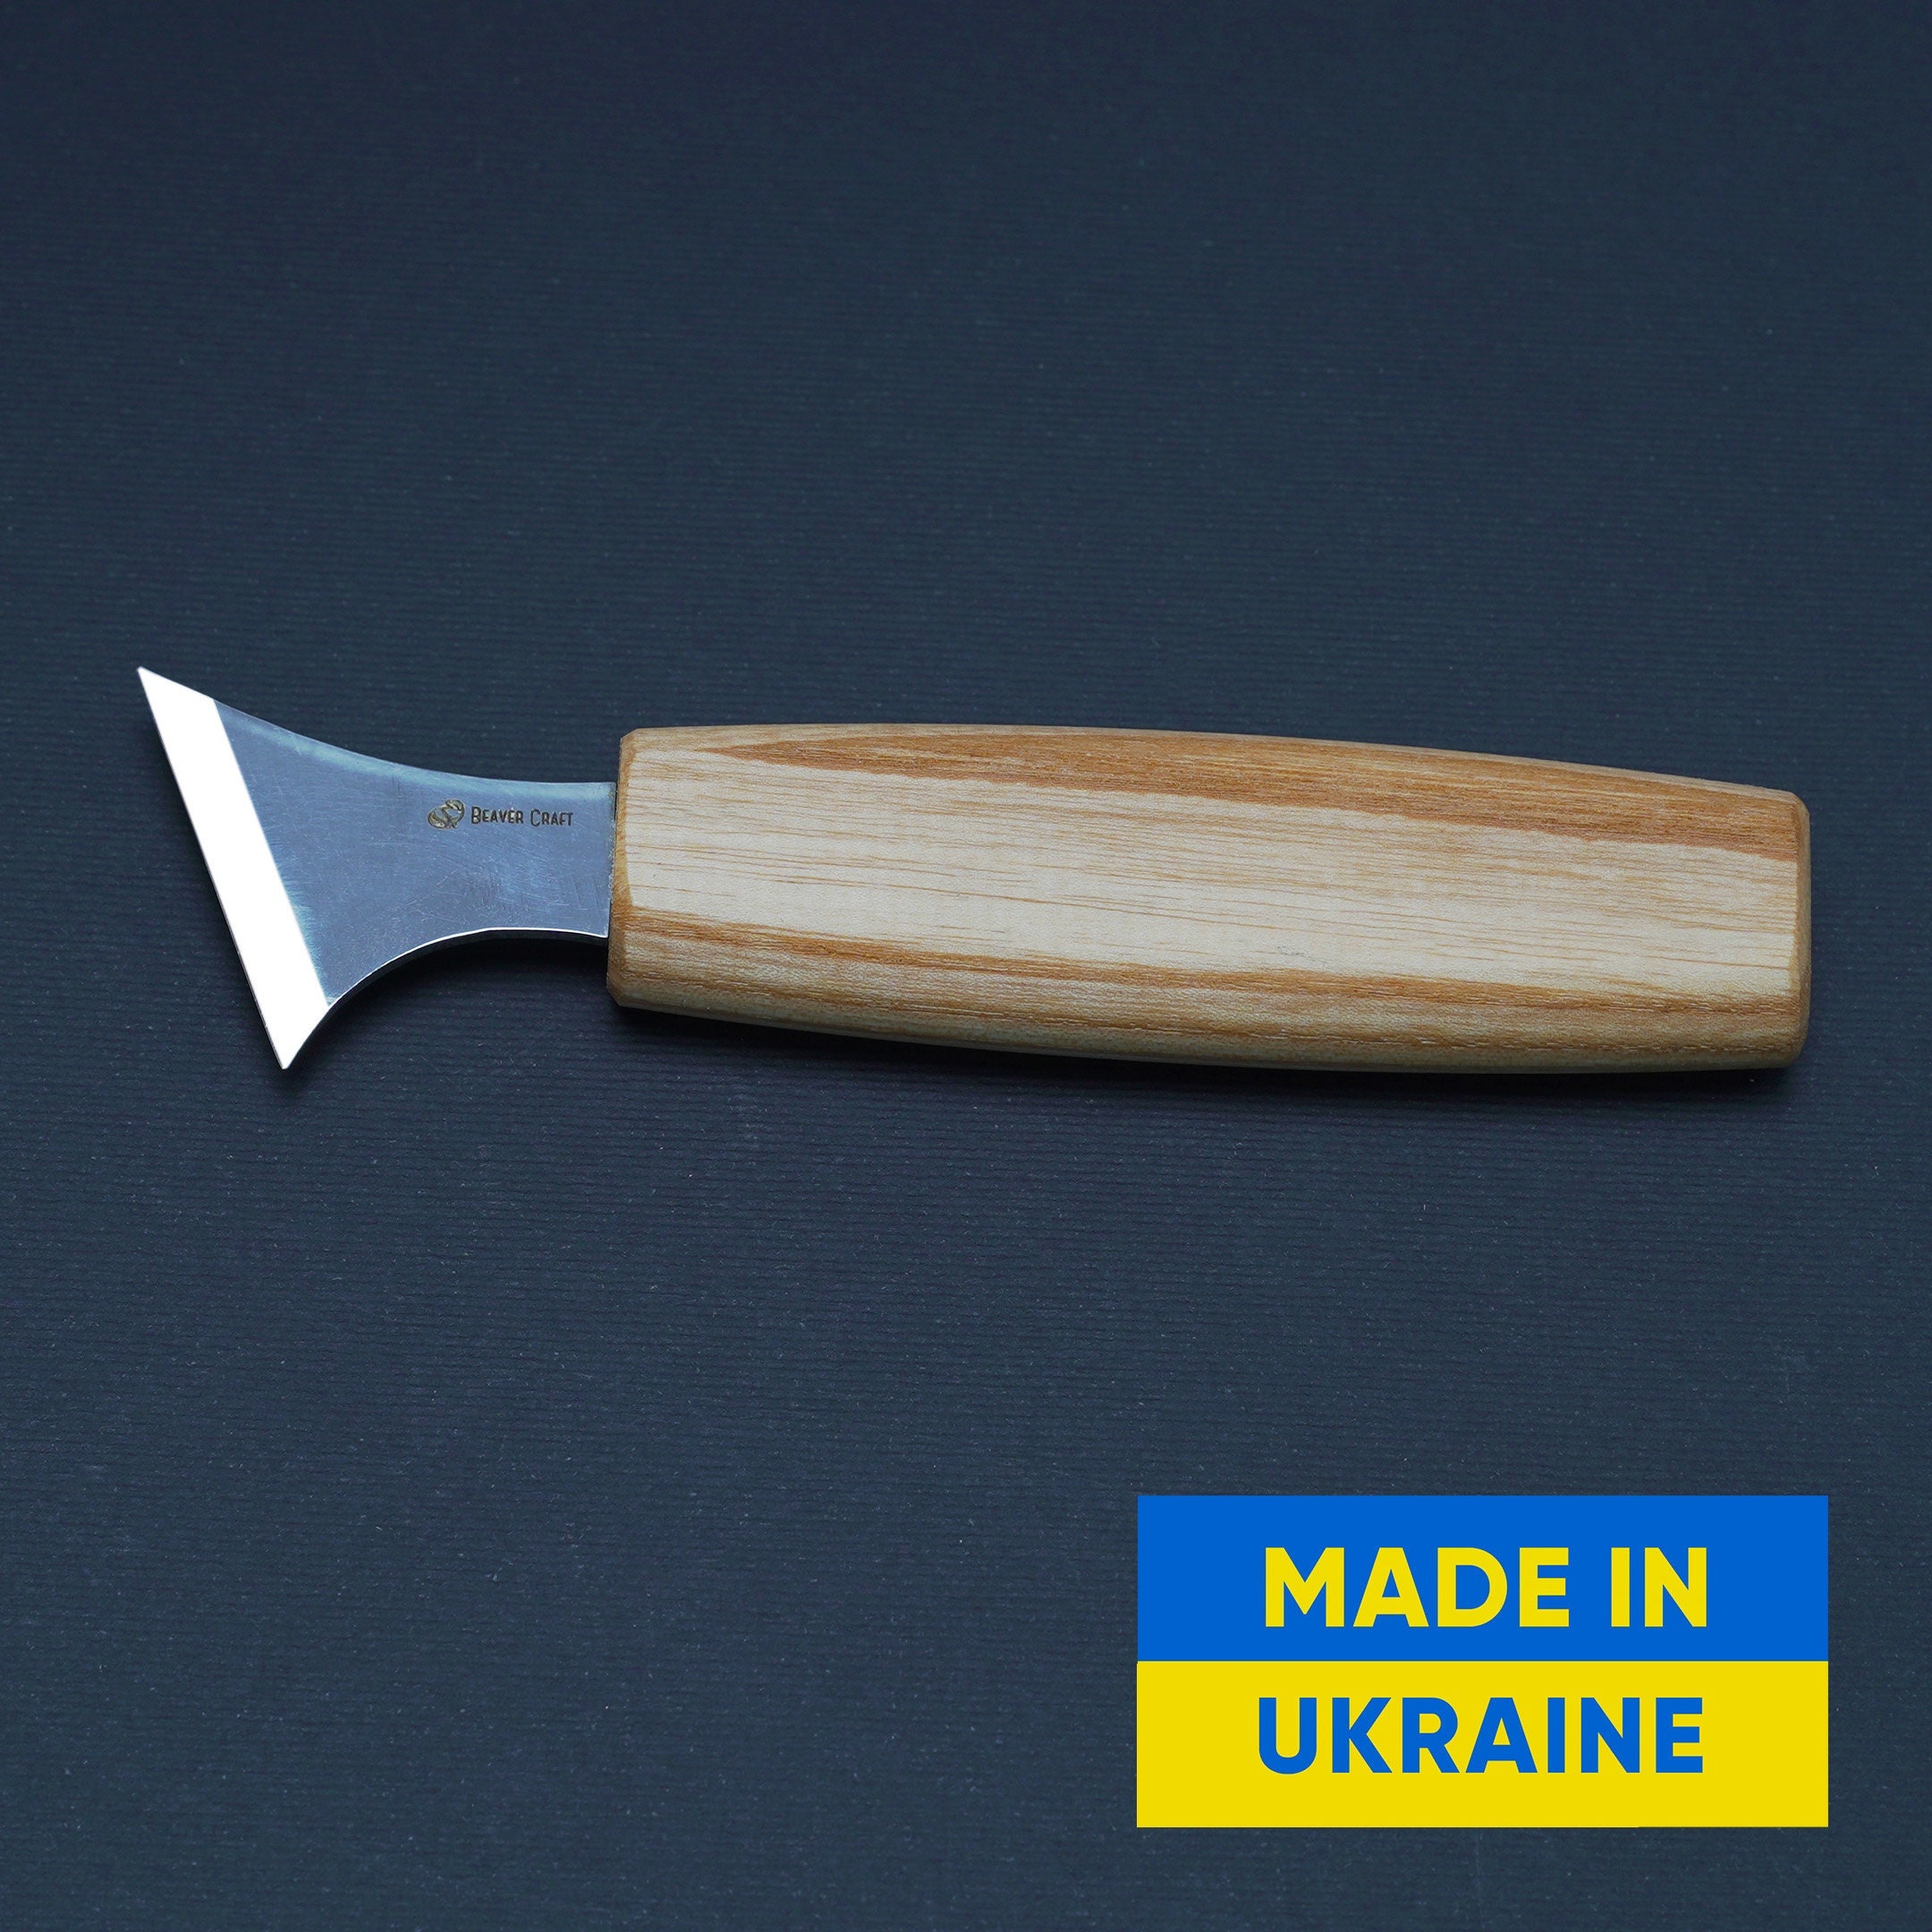 BeaverCraft Geometric Carving Knife C10, wood carving knife for